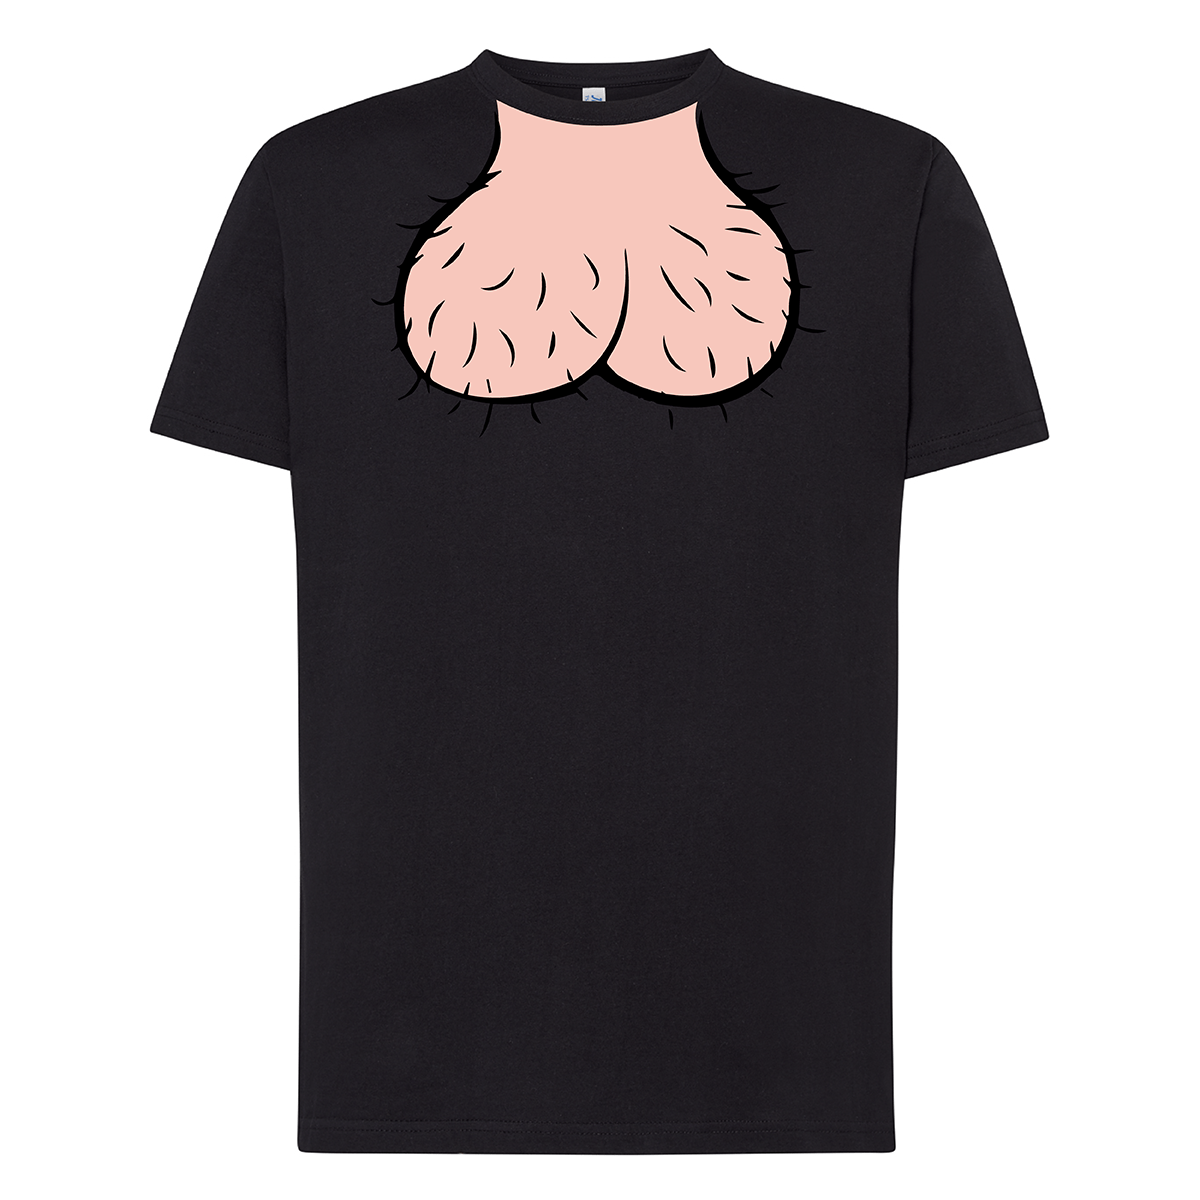 Lol T-Shirt T-shirt S / Nero Testa di